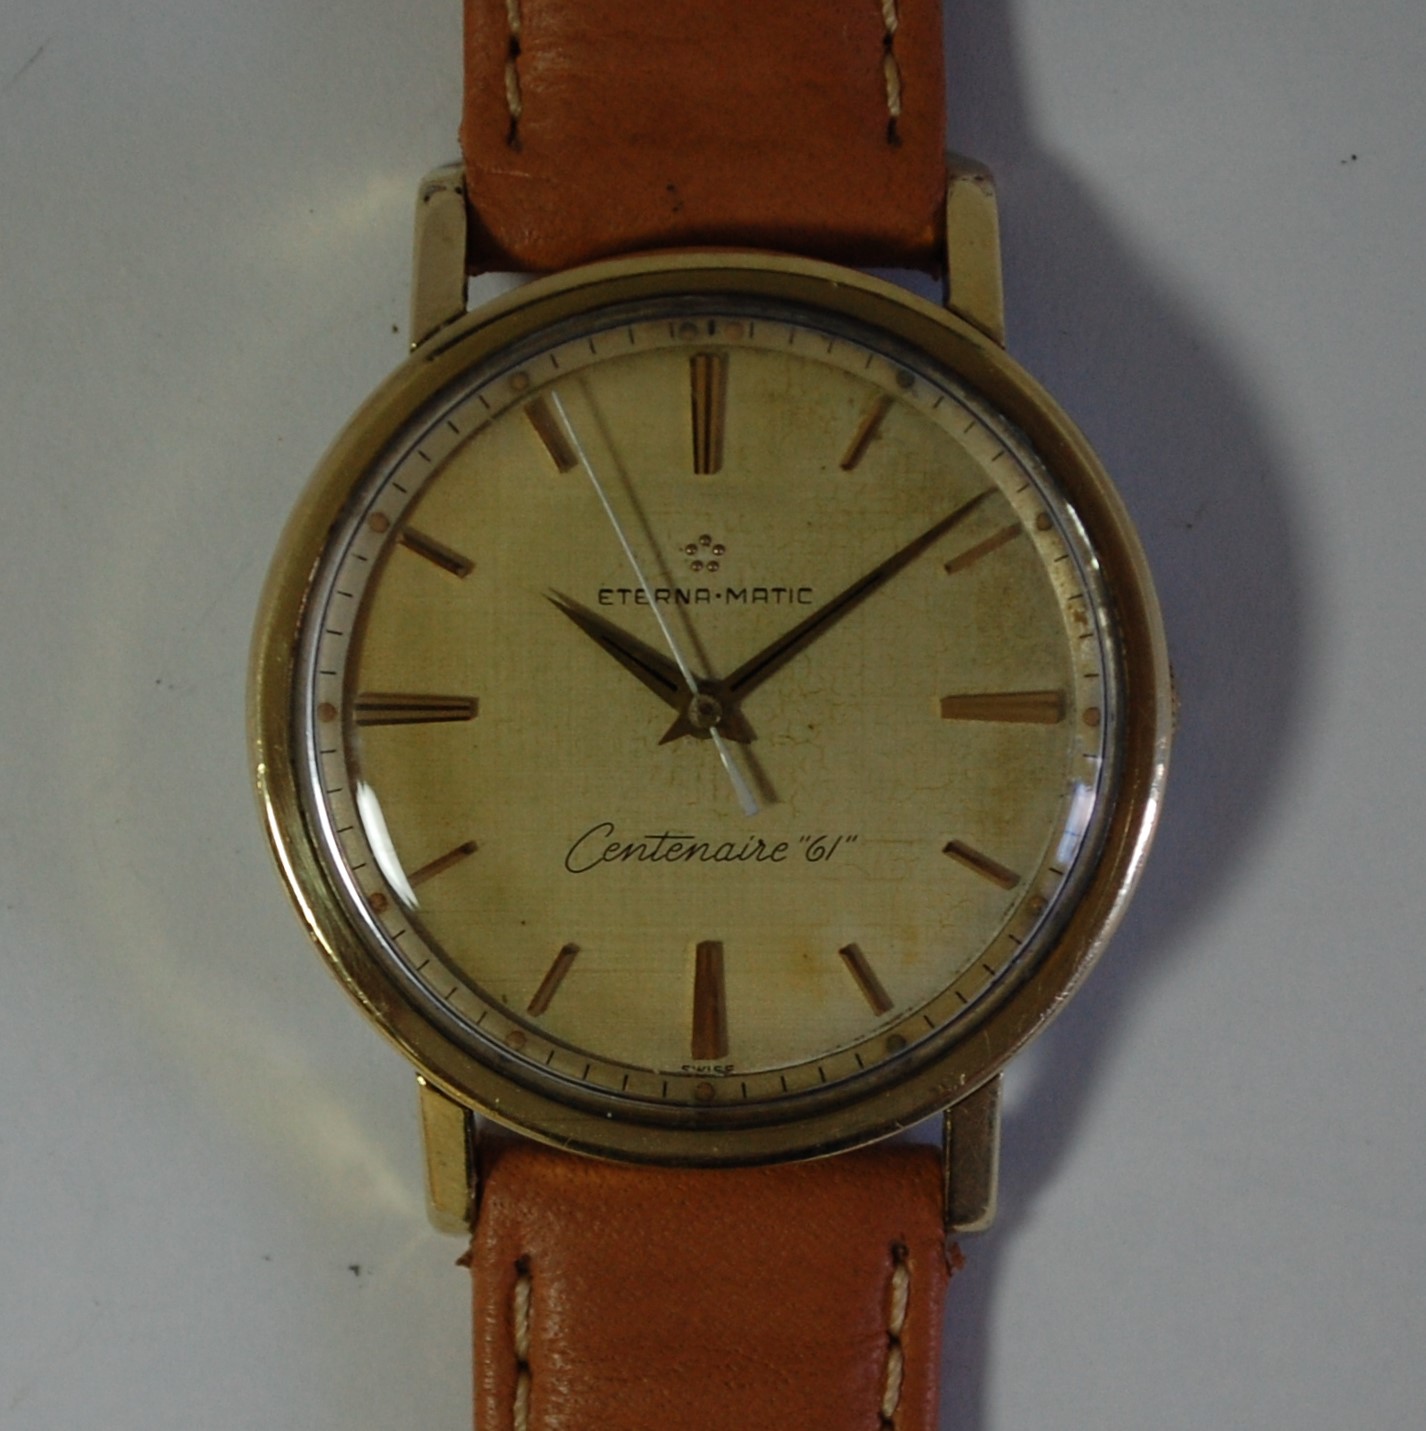 SOLD 1961 Eterna-Matic Centenaire 61 - Birth Year Watches